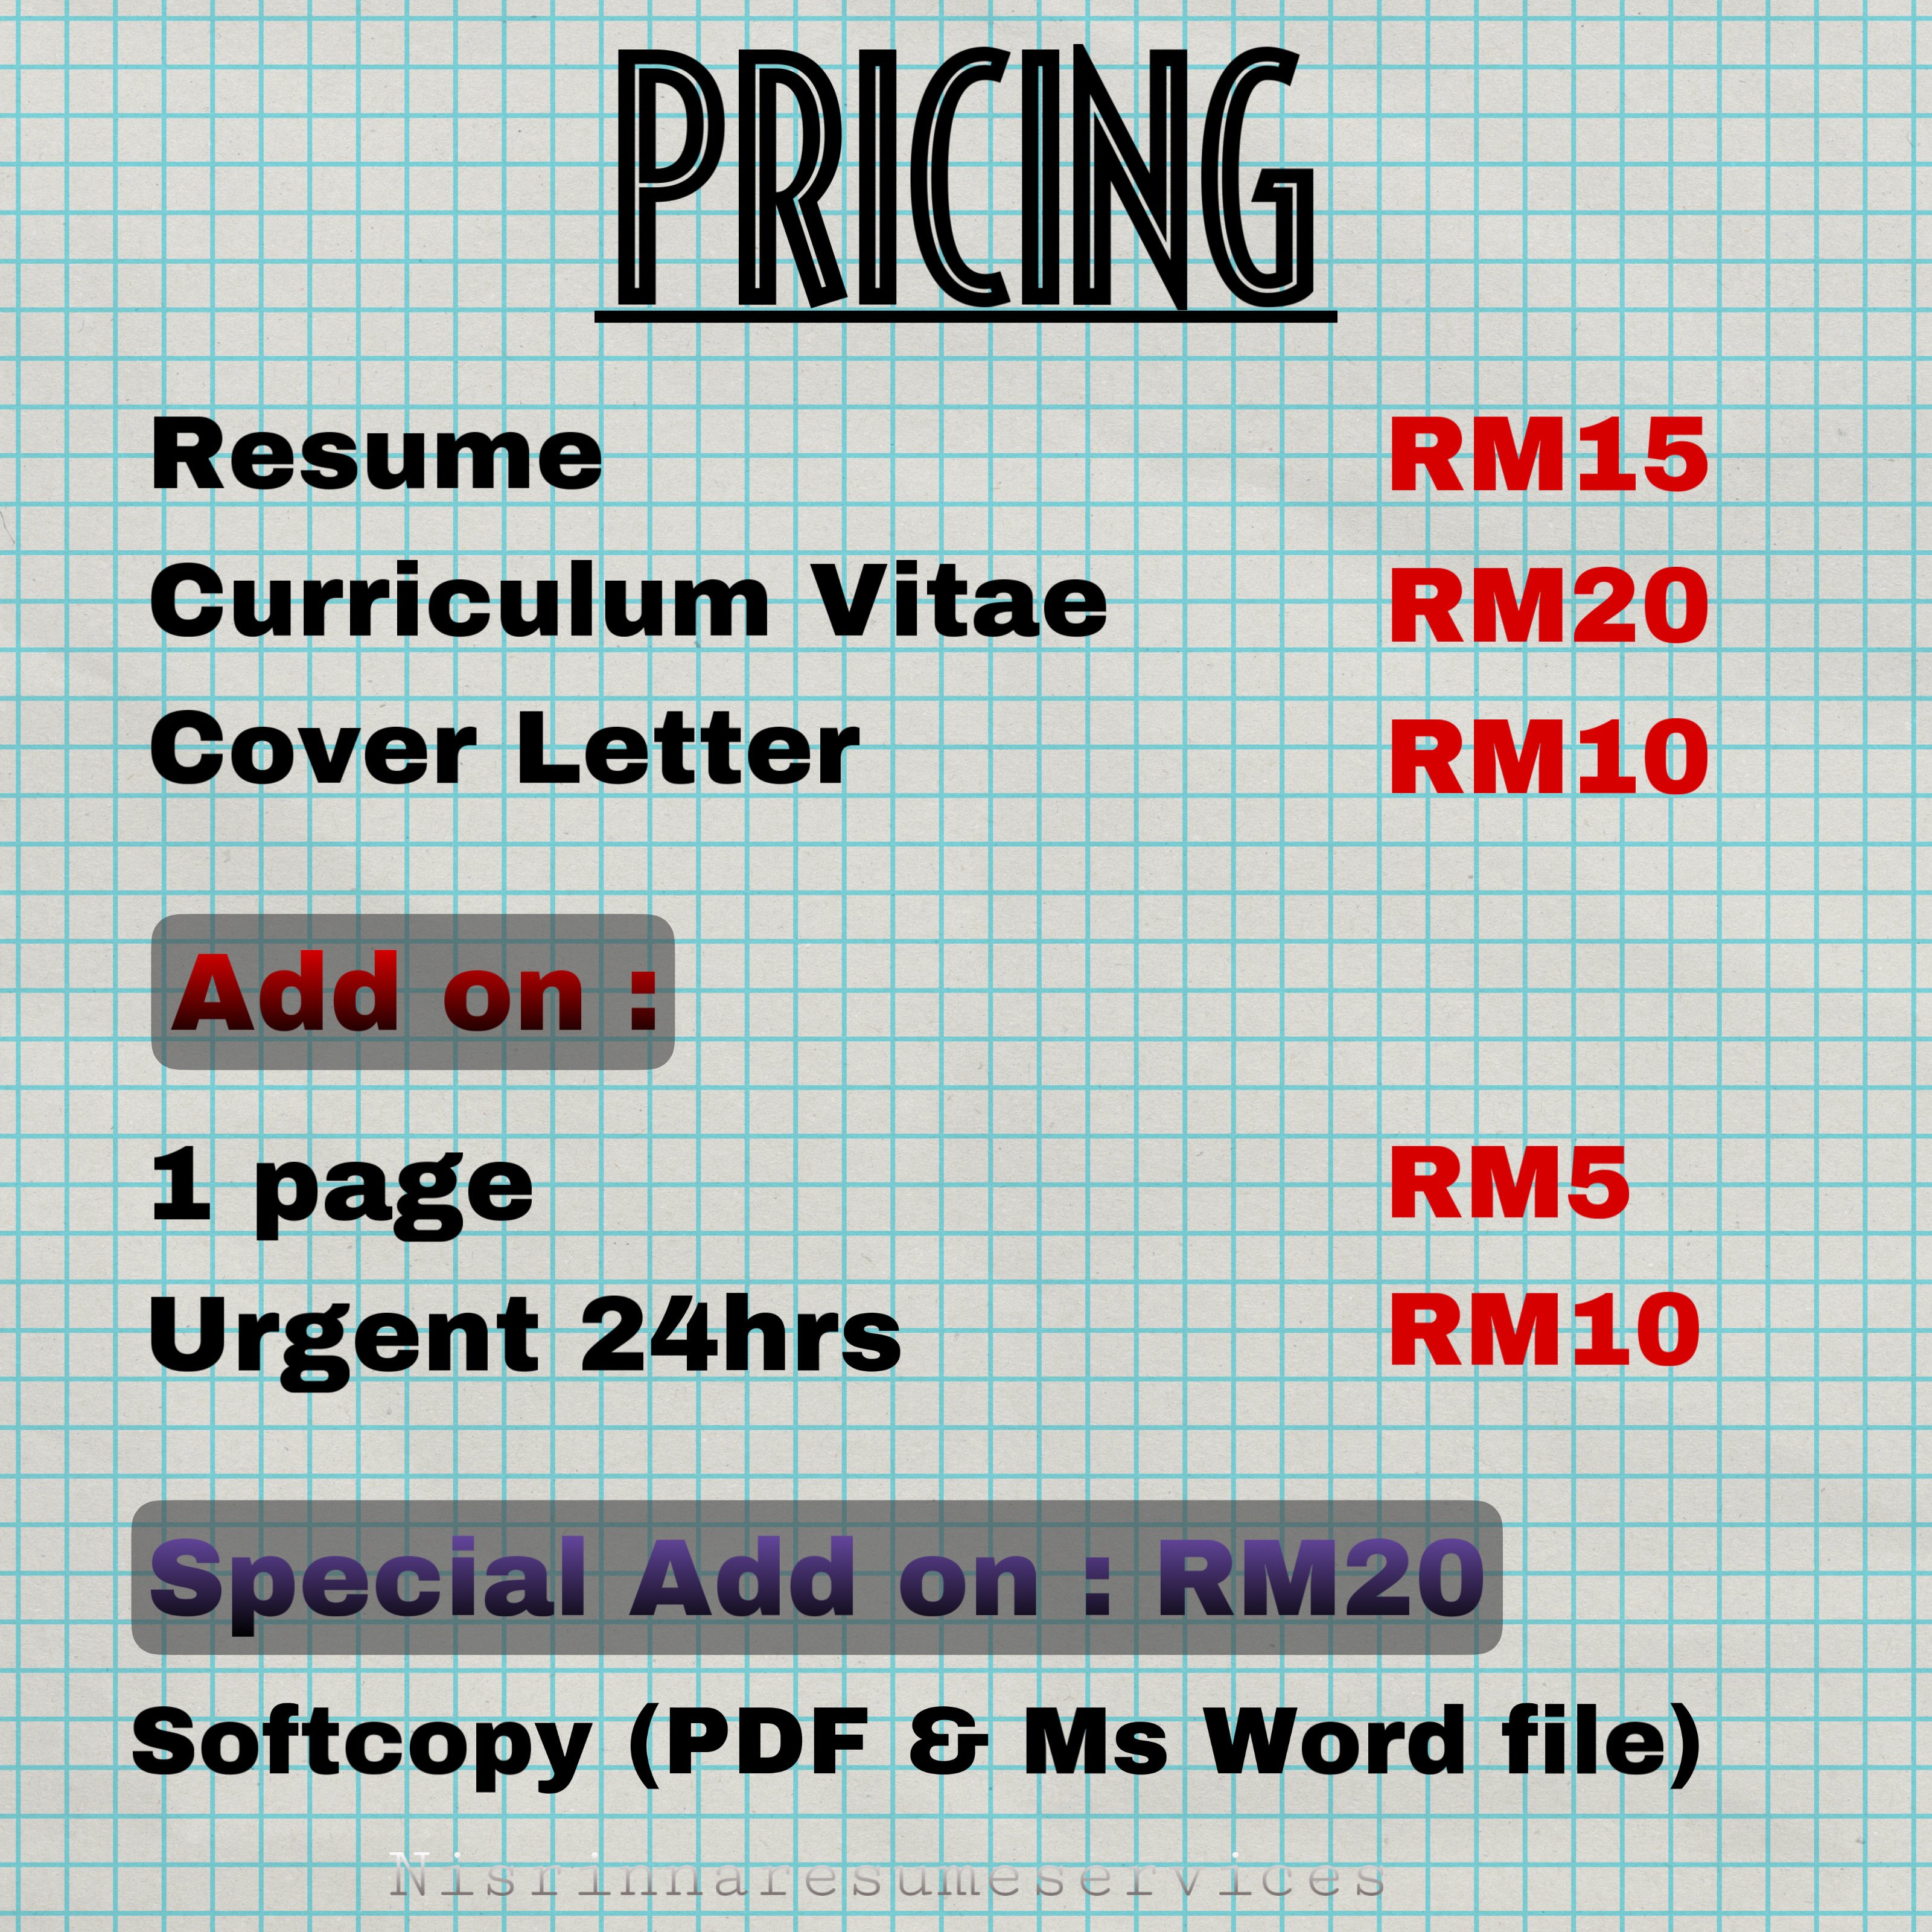 Resume pricing list